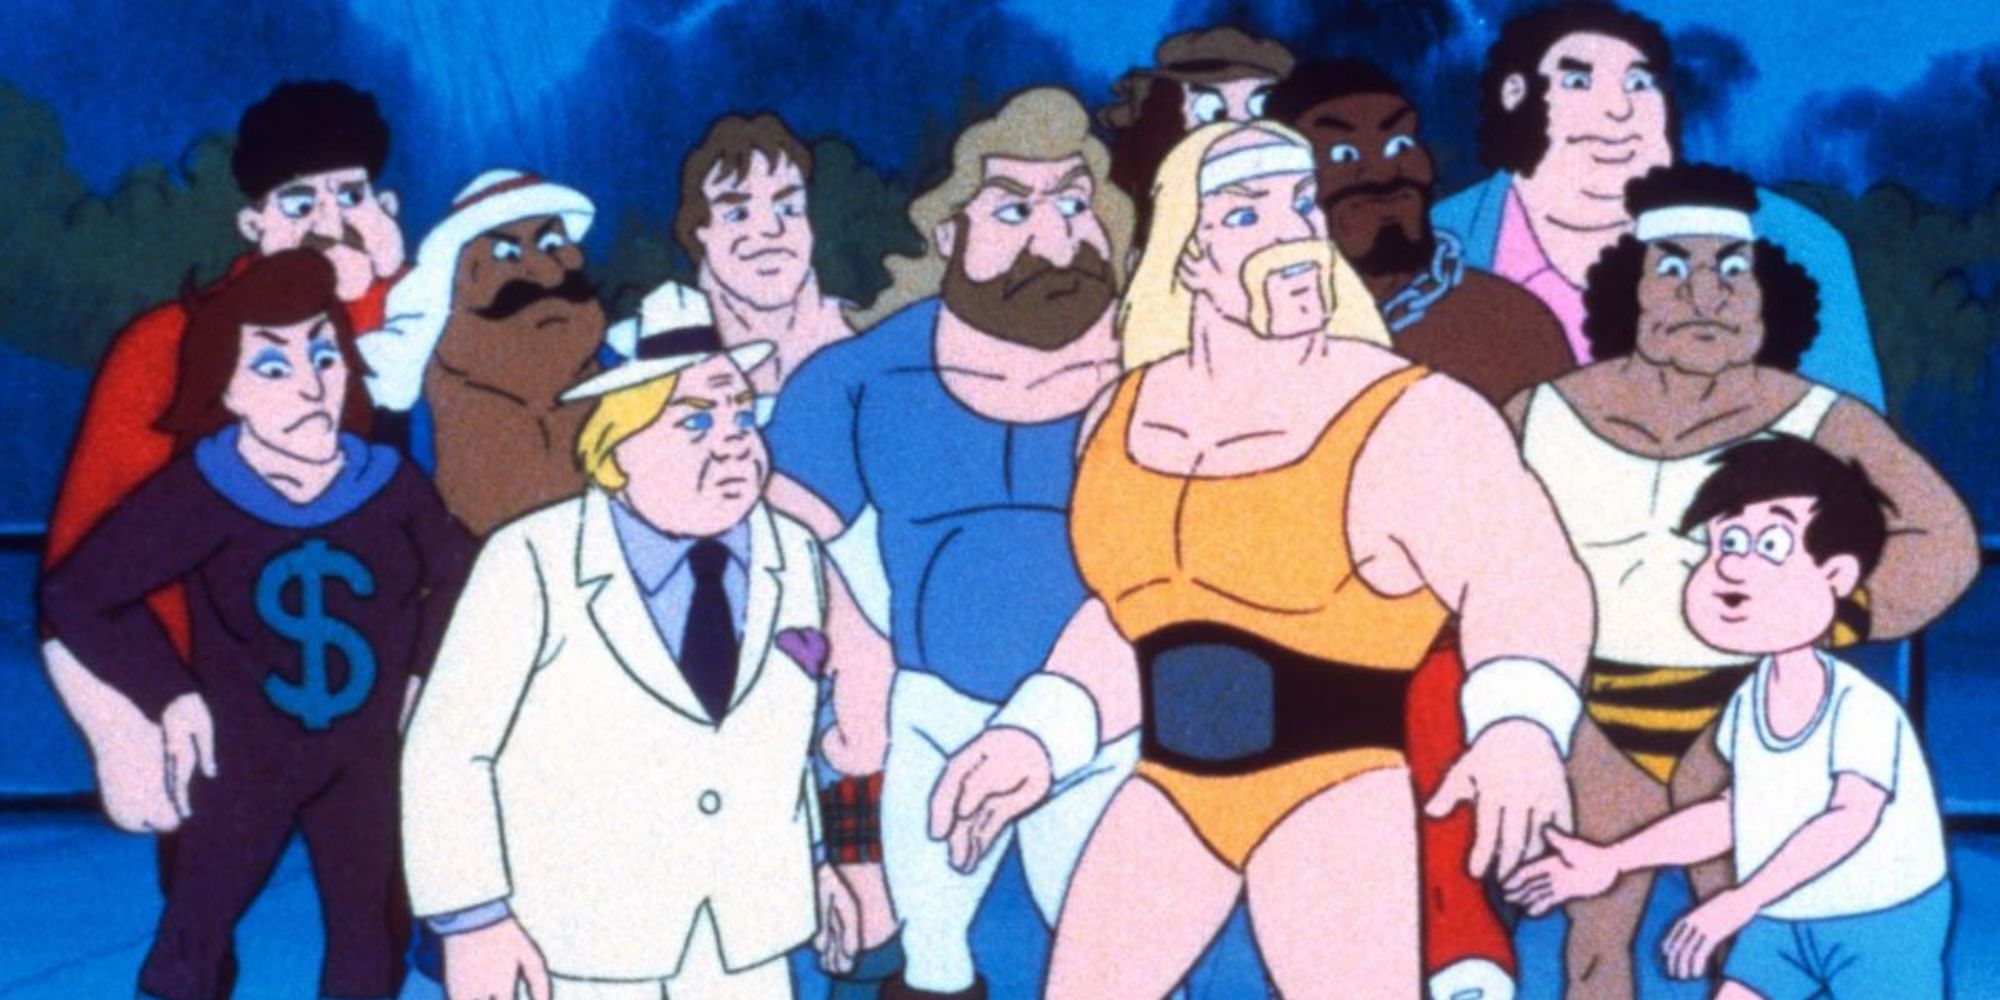 Cartoon Hulk Hogan with his wrestling friends and enemies.